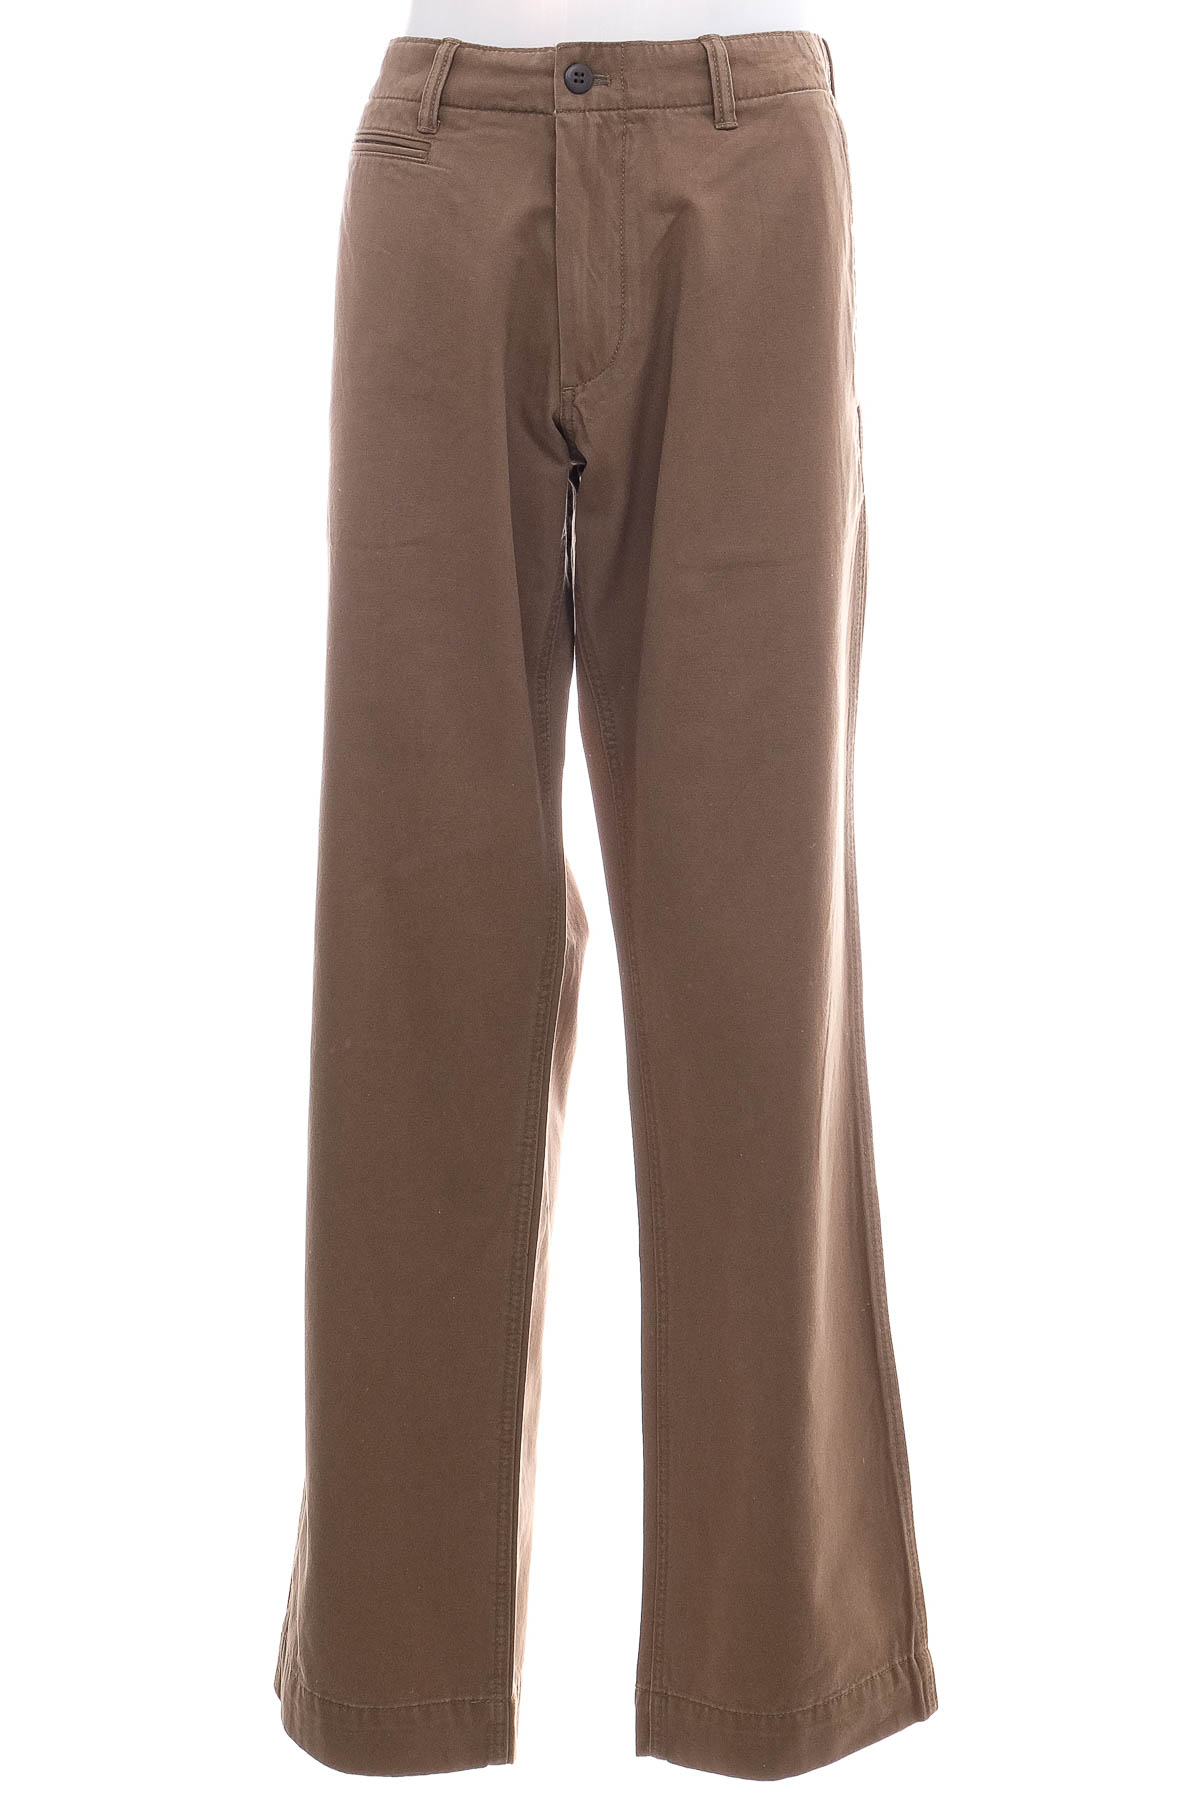 Men's trousers - GAP - 0